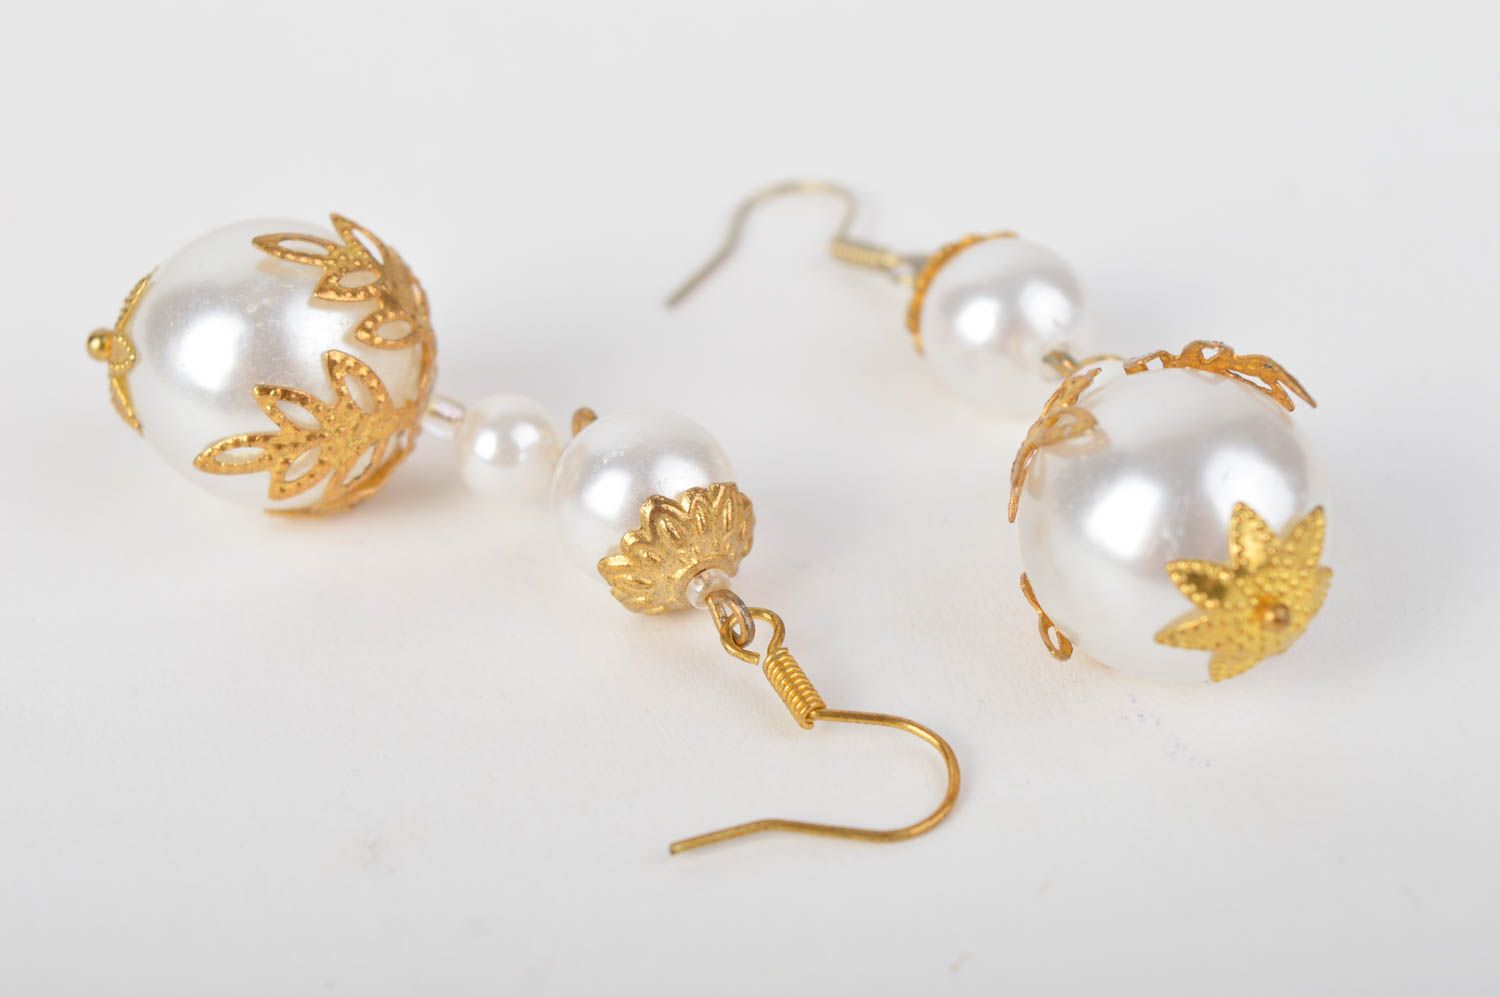 Handmade earrings designer jewelry dangling earrings fashion accessories photo 4